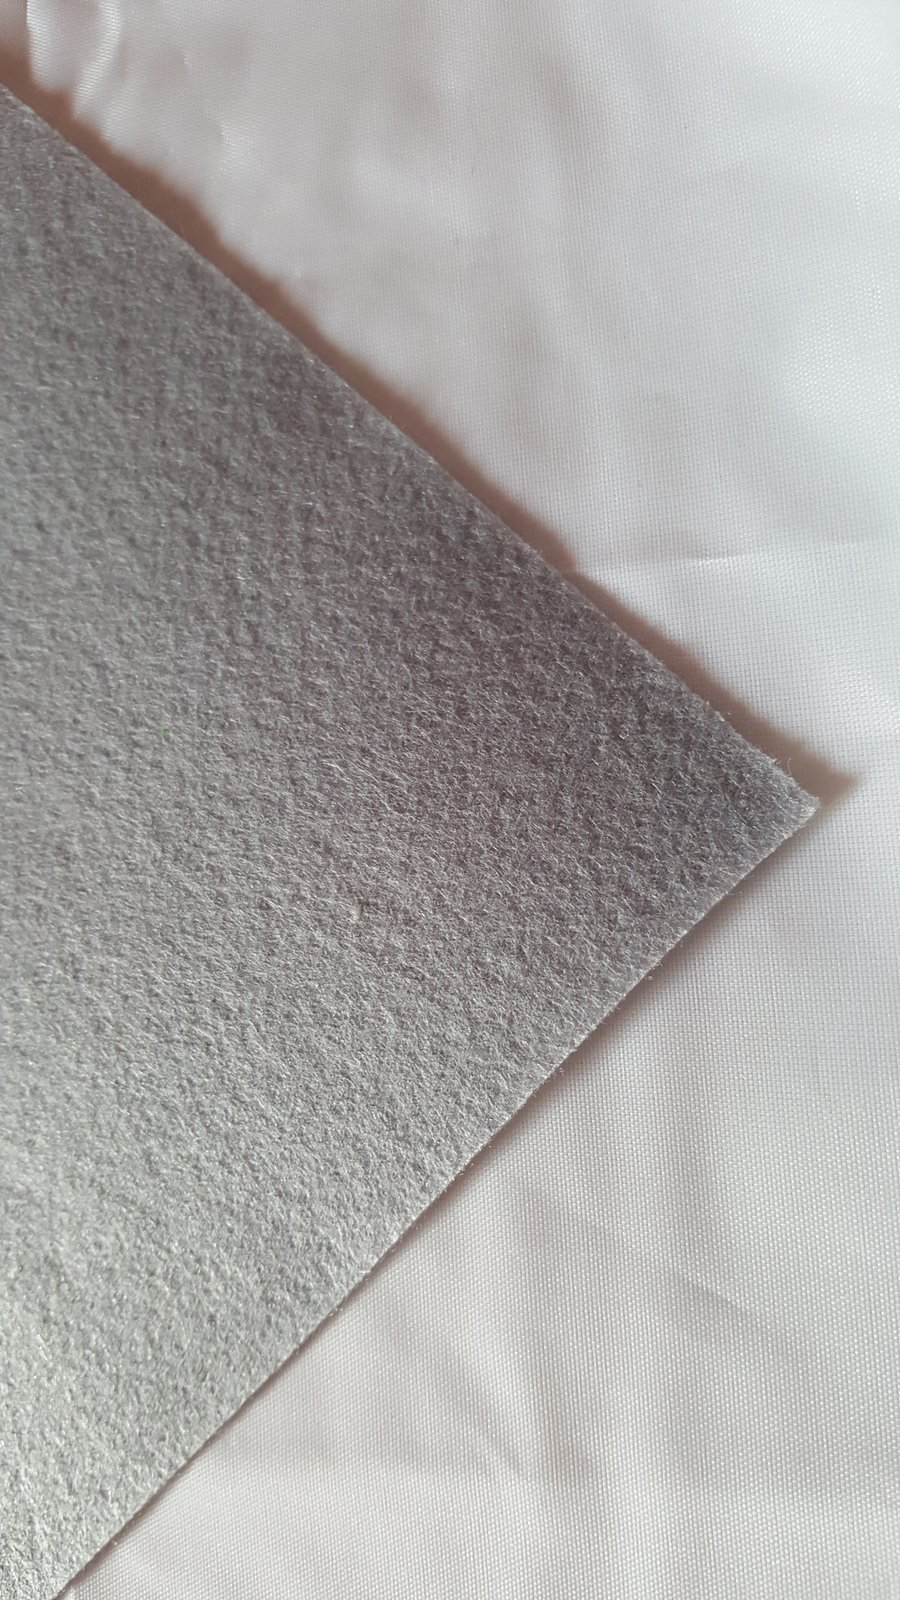 1 x Felt Sheet - Square - 12" (30cm) - Grey 